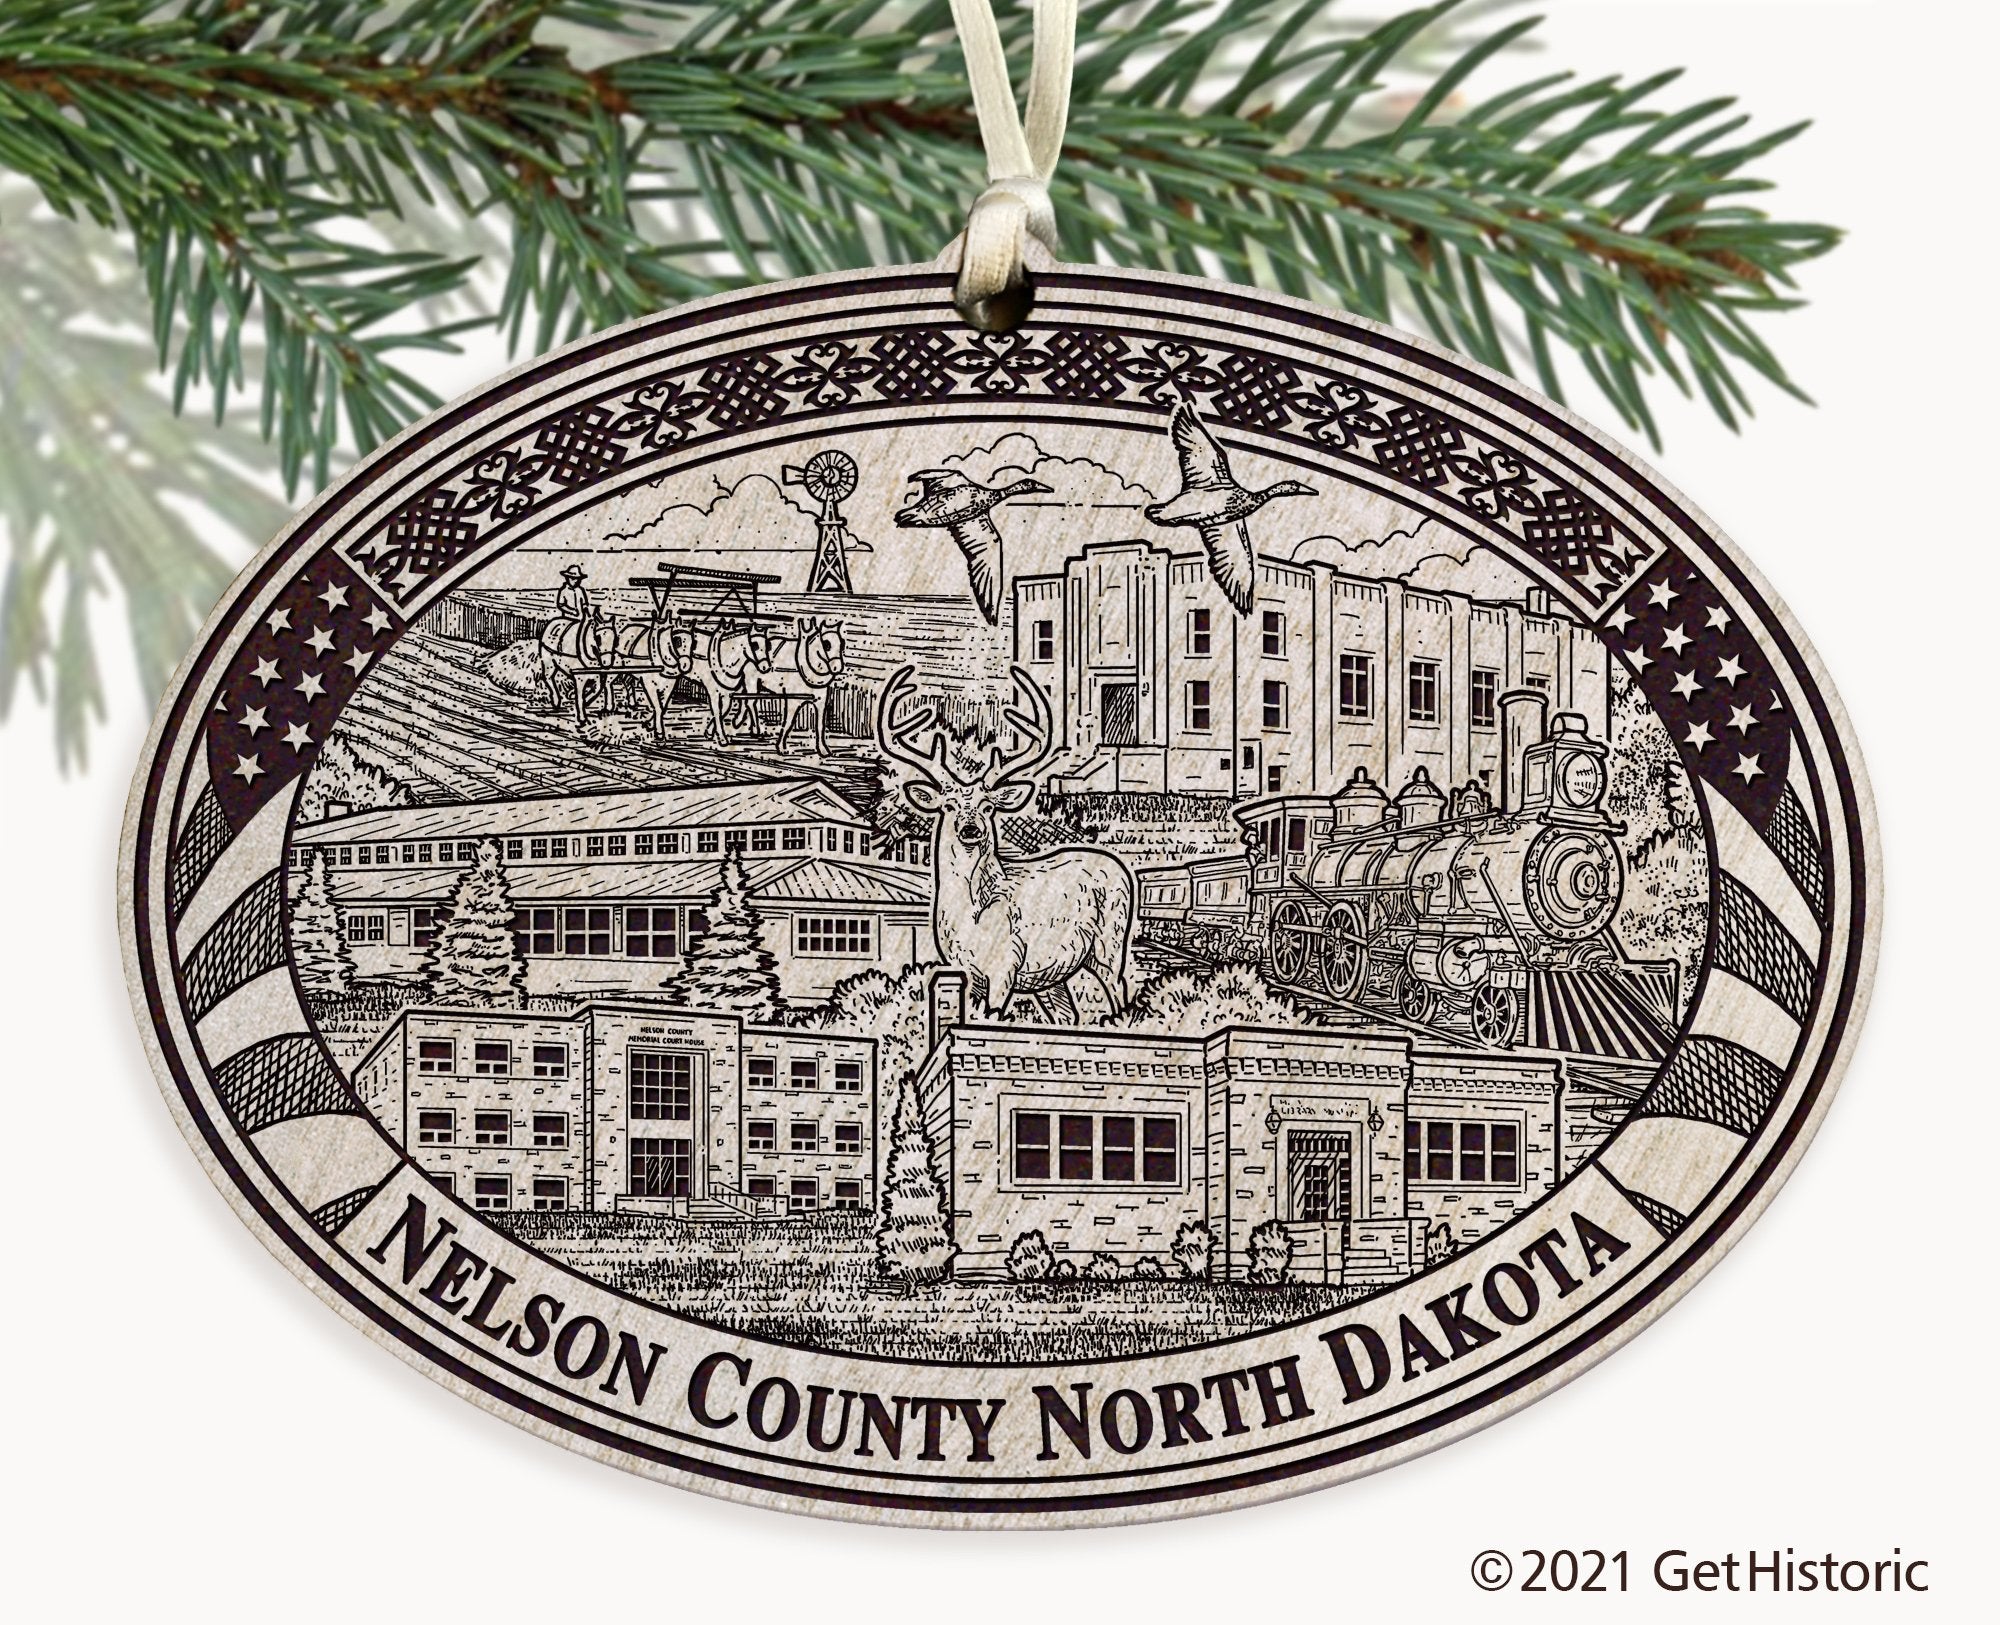 Nelson County North Dakota Engraved Ornament